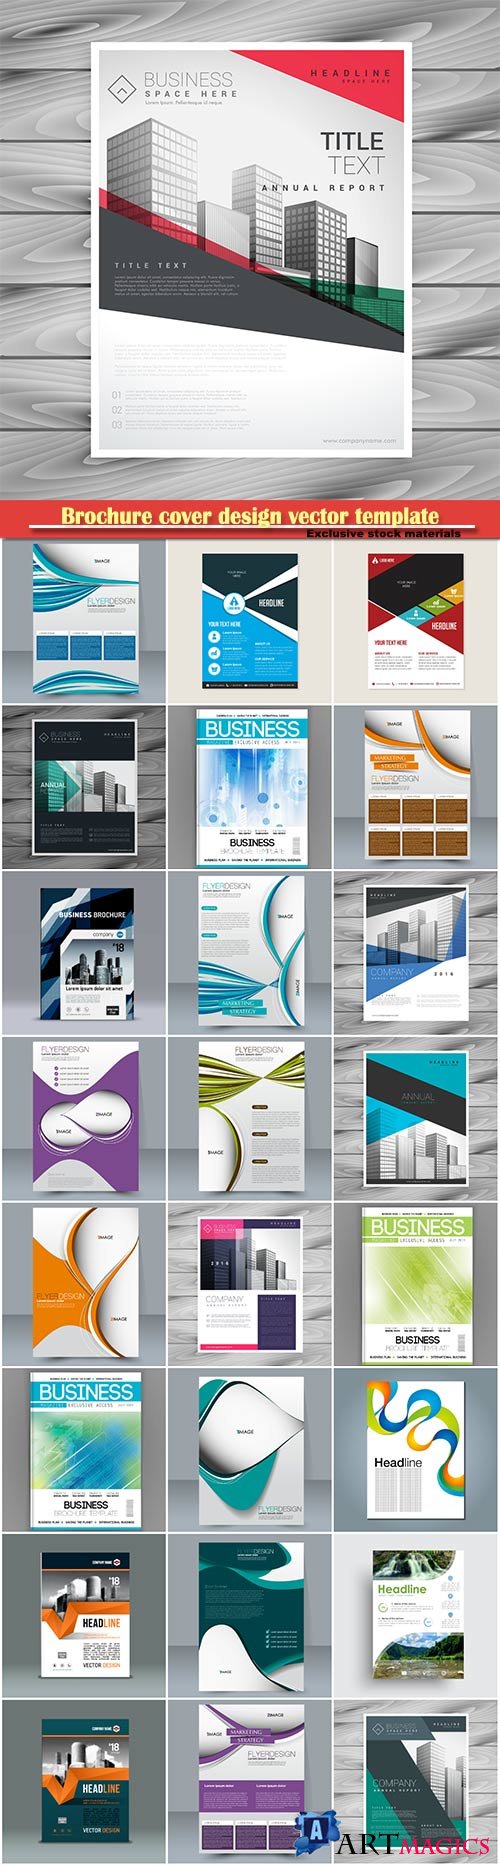 Brochure cover design vector template # 19